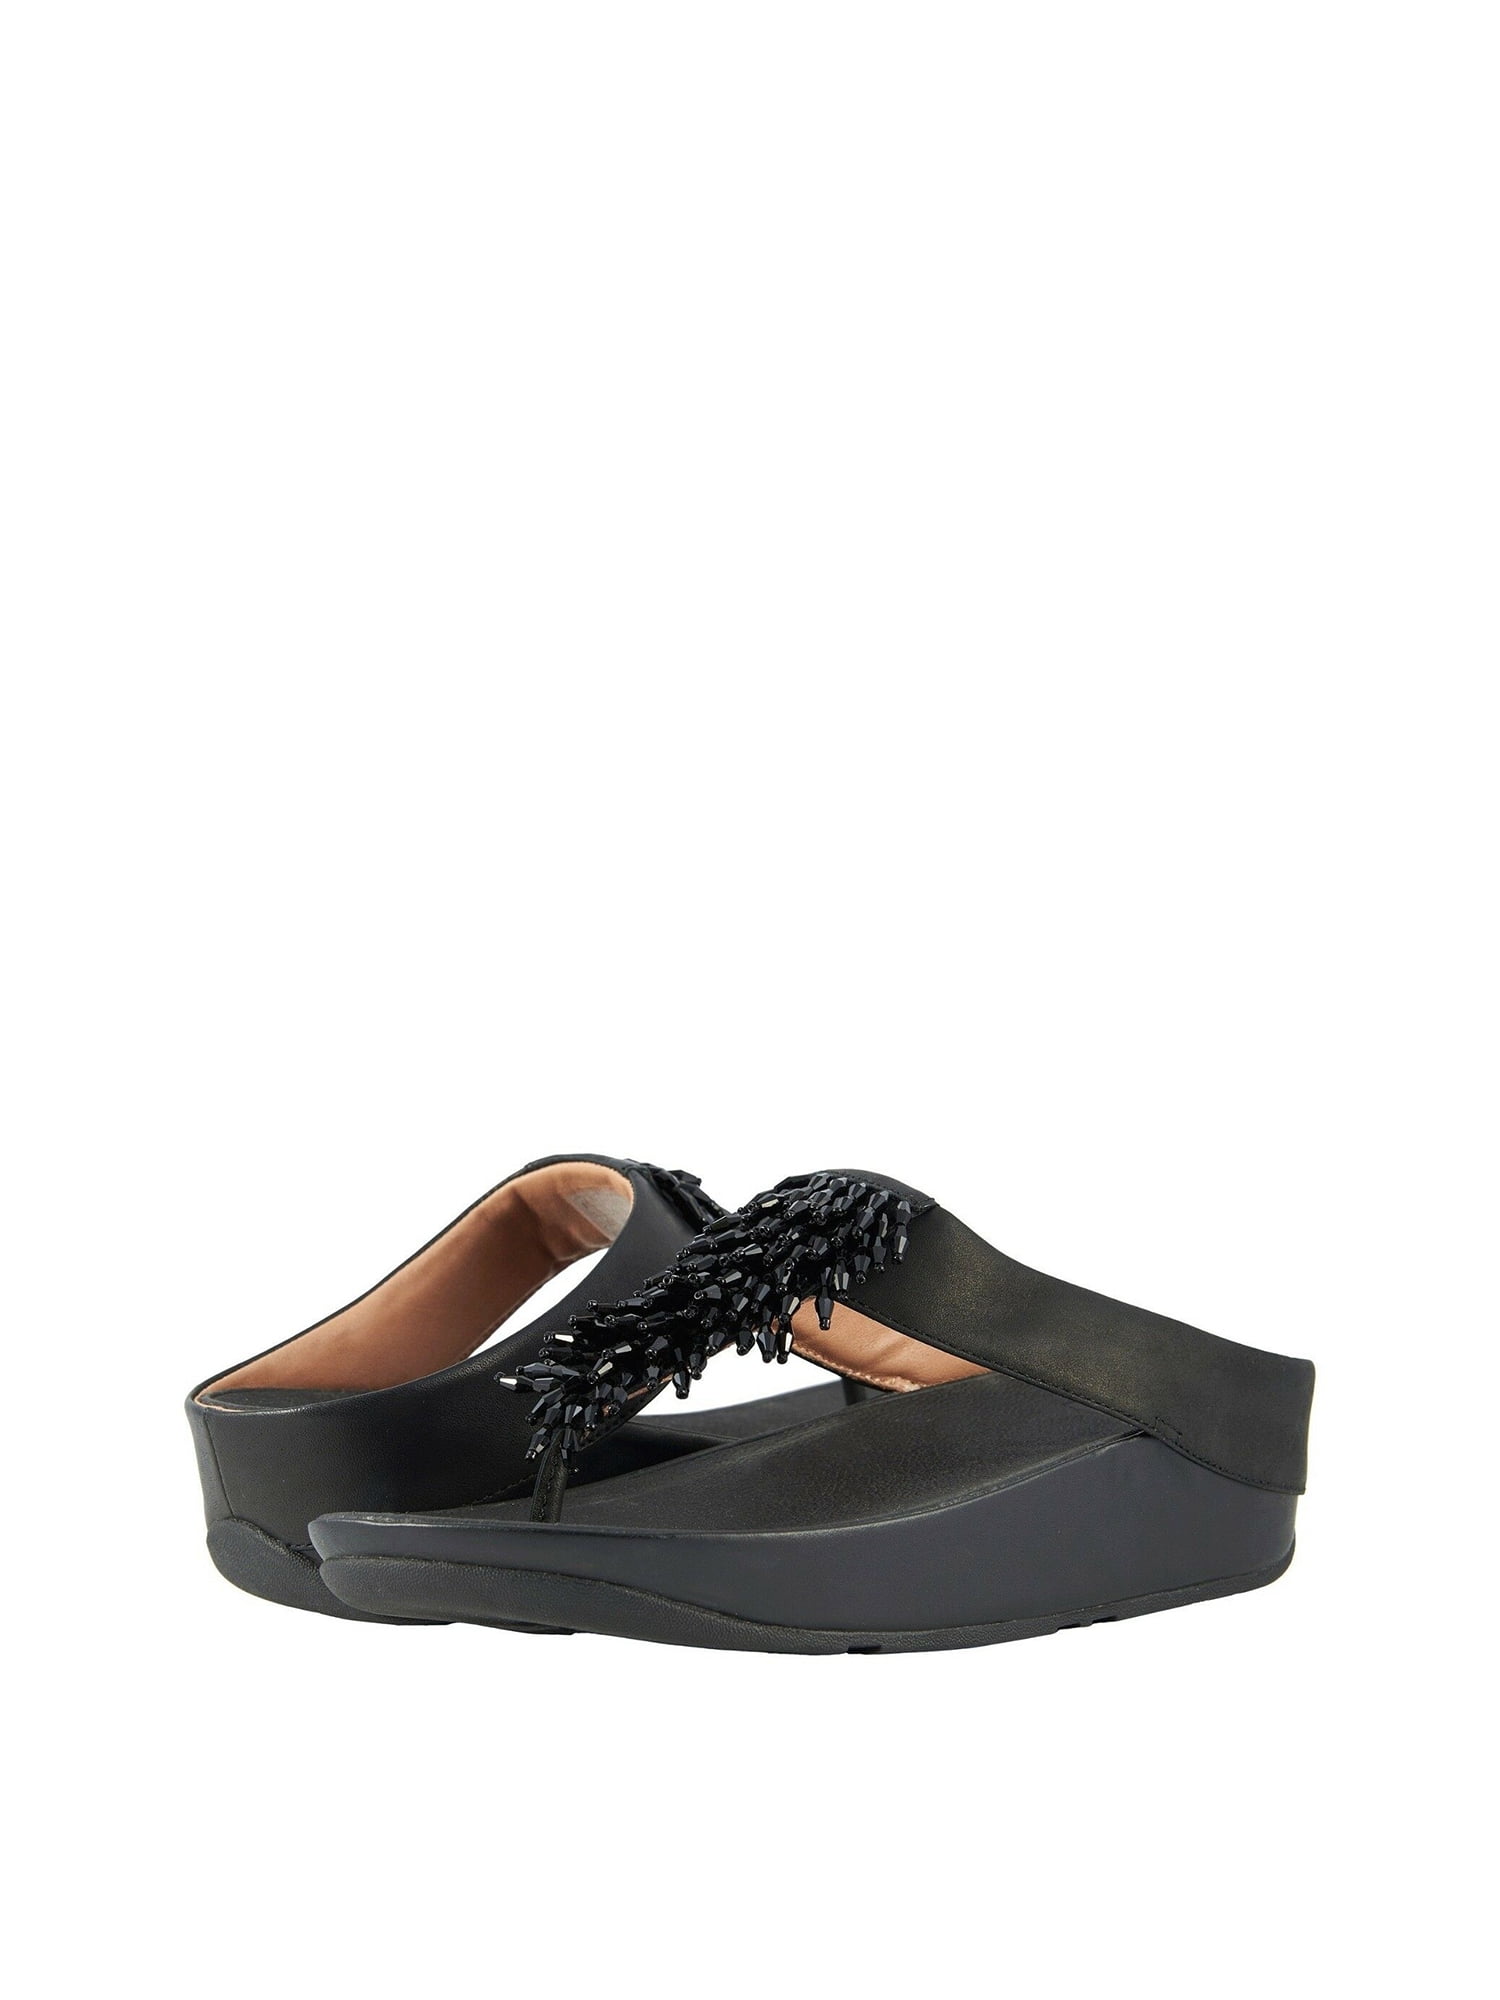 Fitflop Rumba Toe Thong Women's Sandal K26-001 - Walmart.com